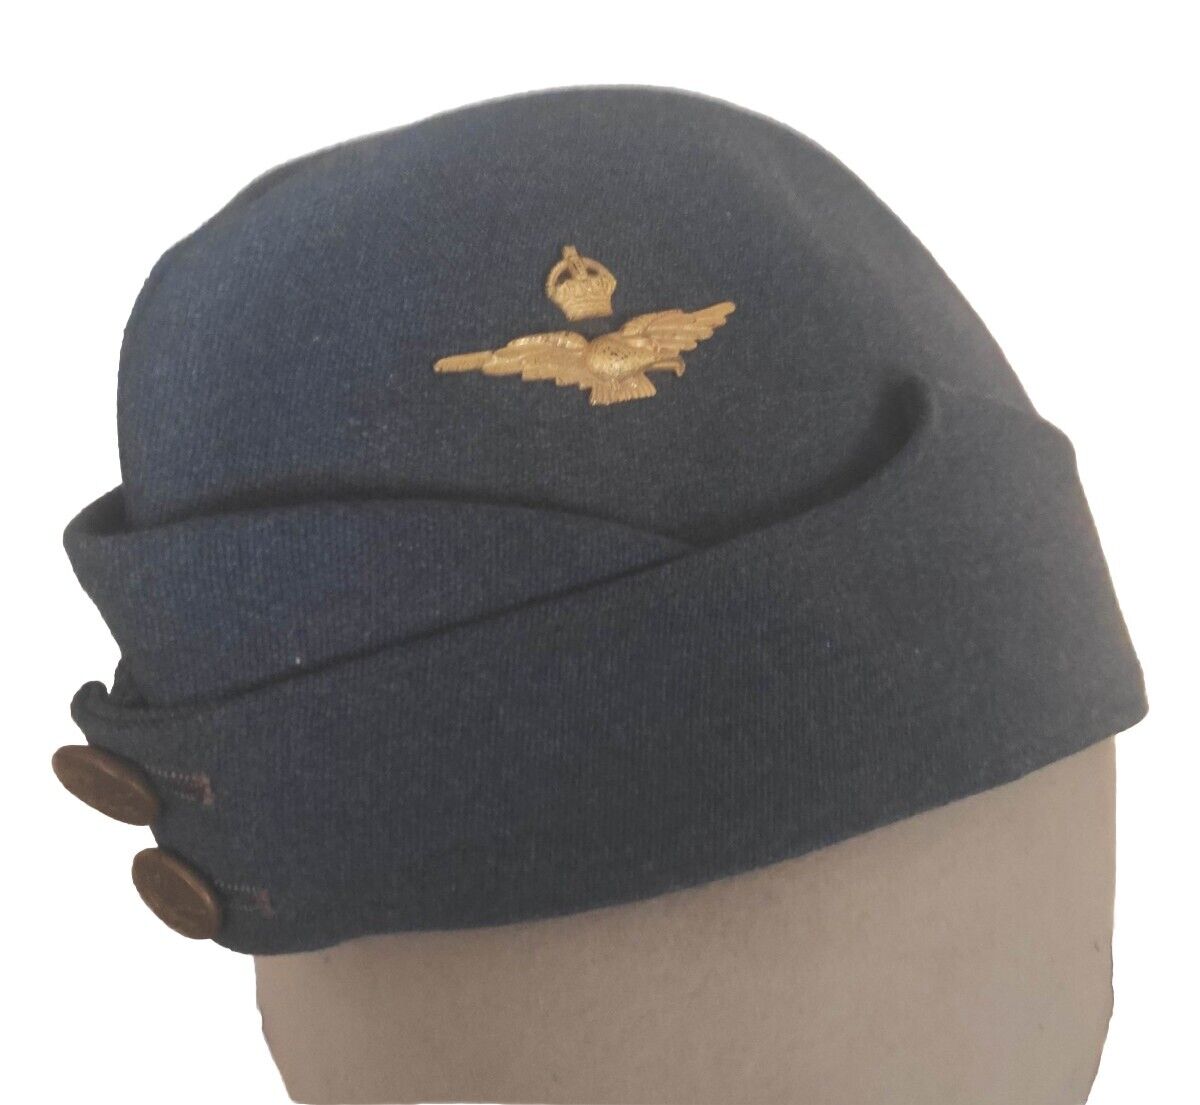 Superb RAF Royal Air Force WW2 Officer Cap 100% ORIGINAL (Size 59)